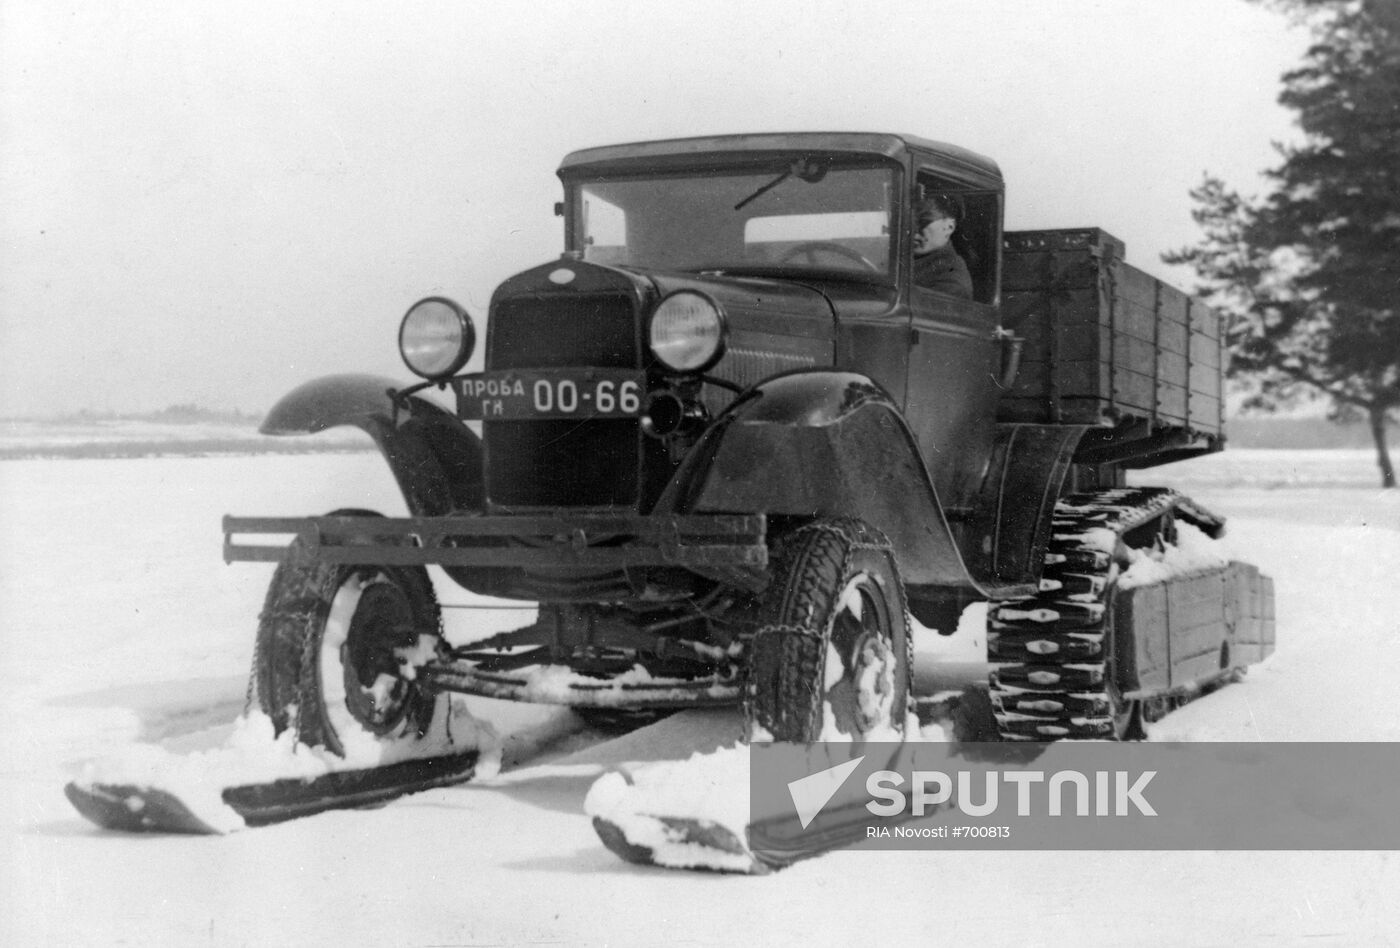 Snowmobile based on GAZ-AA truck